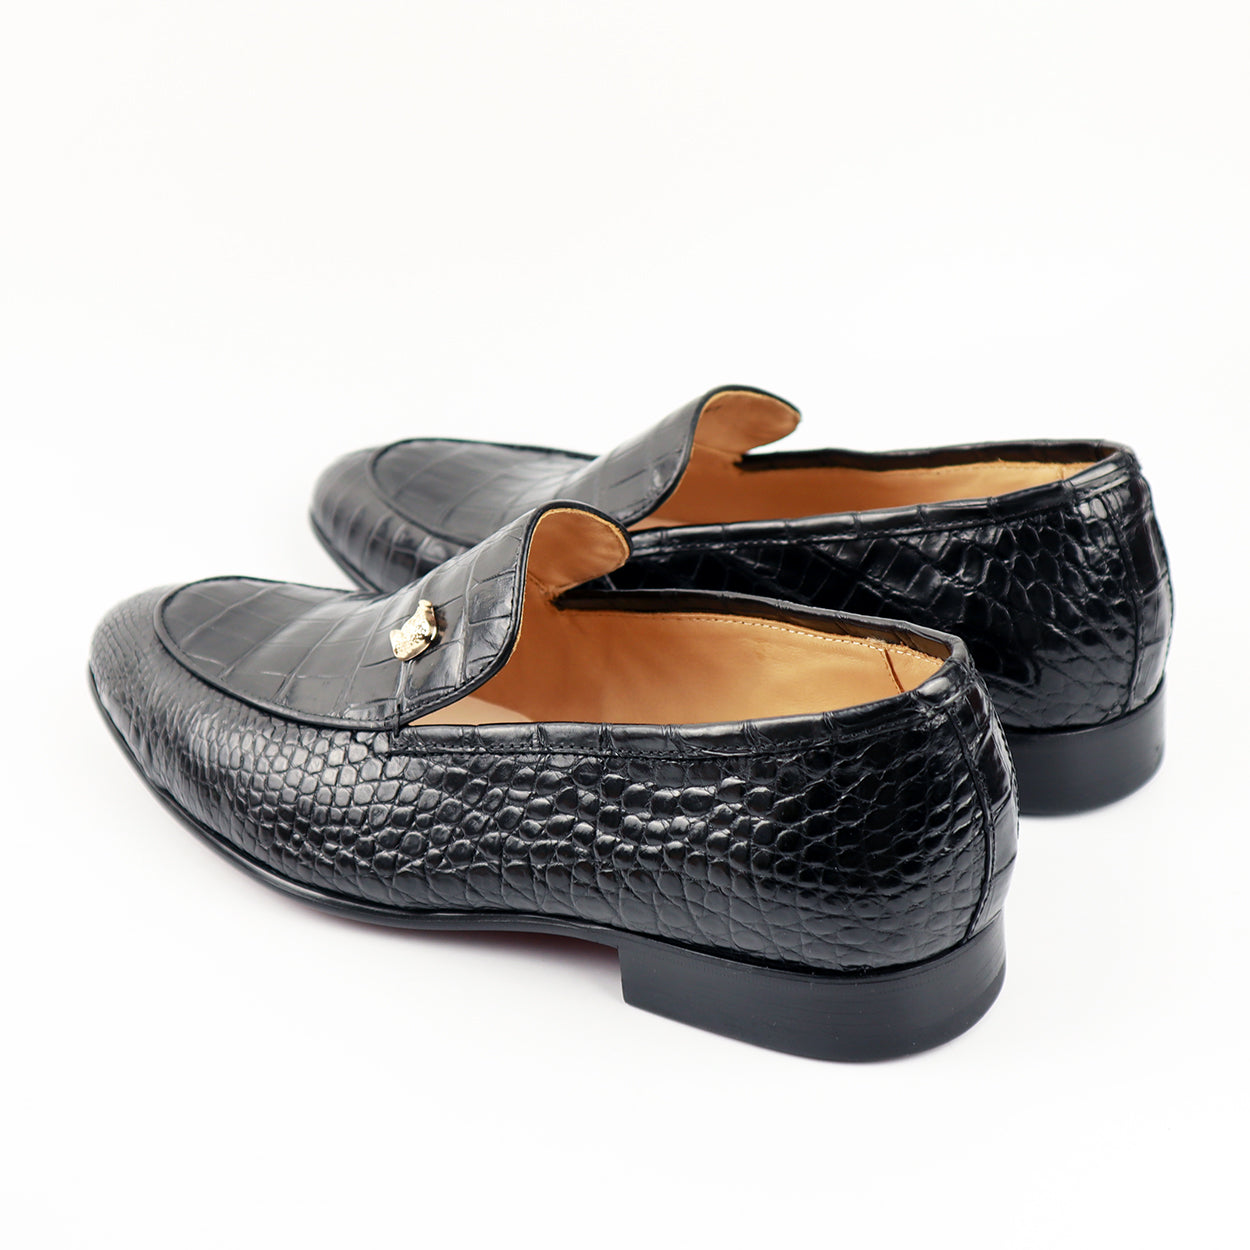 Men's Shoes Genuine Crocodile Alligator Skin Leather Handmade Black Size 7 - Size 14US #319